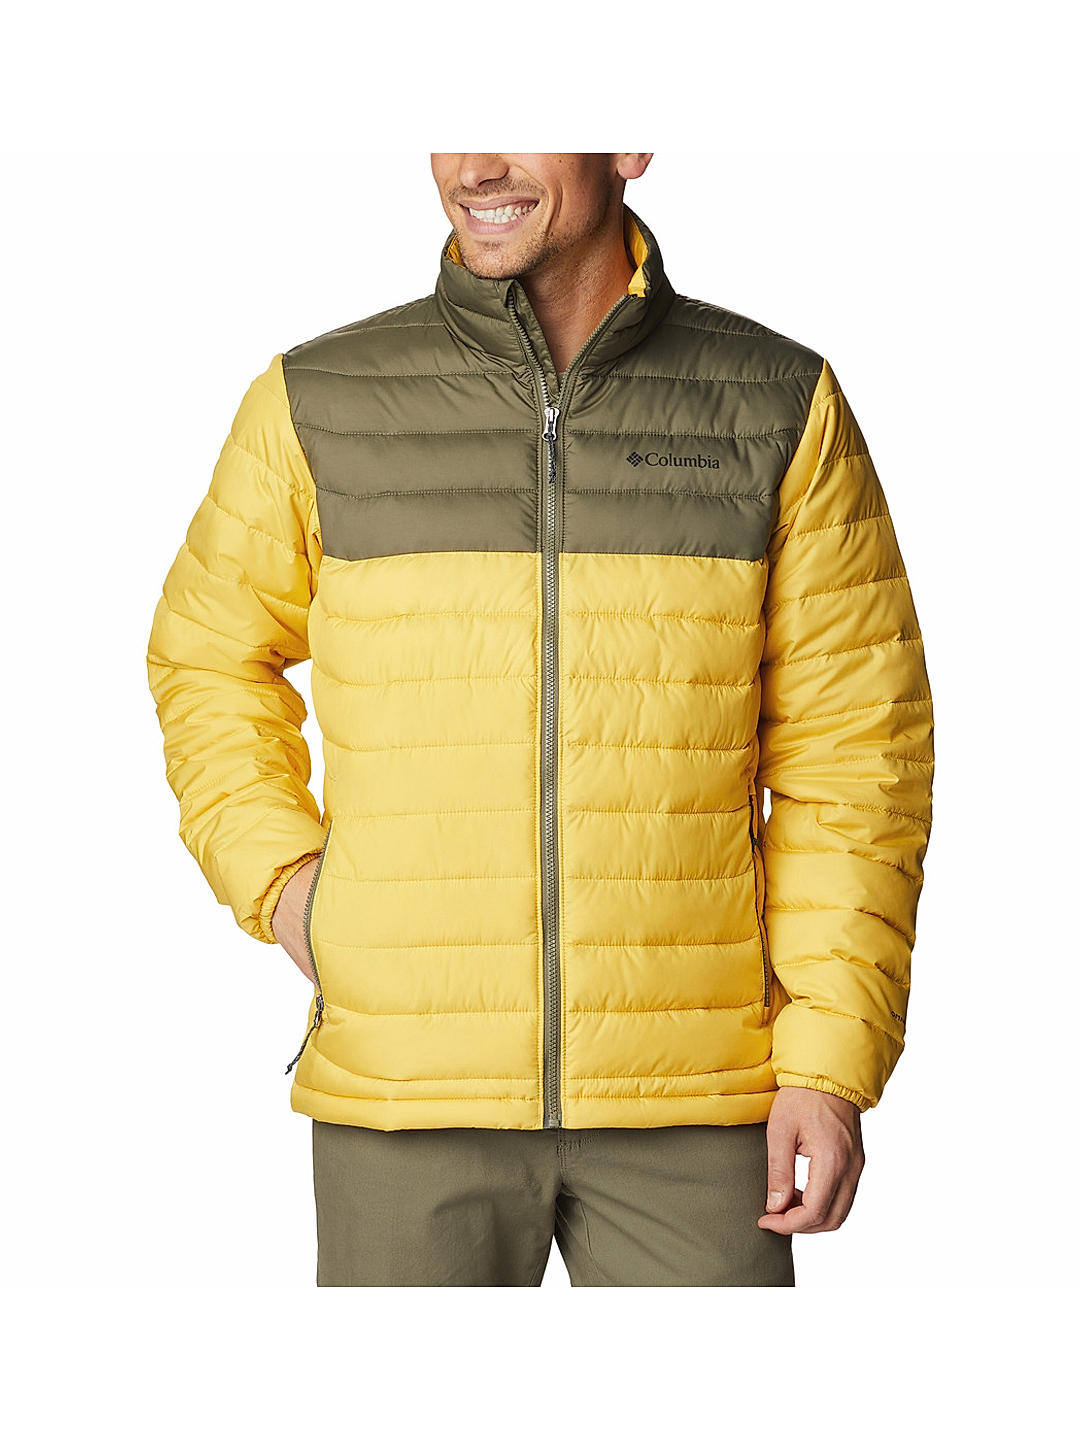 Columbia sports jacket Powder Lite Jkt yellow color 1698001